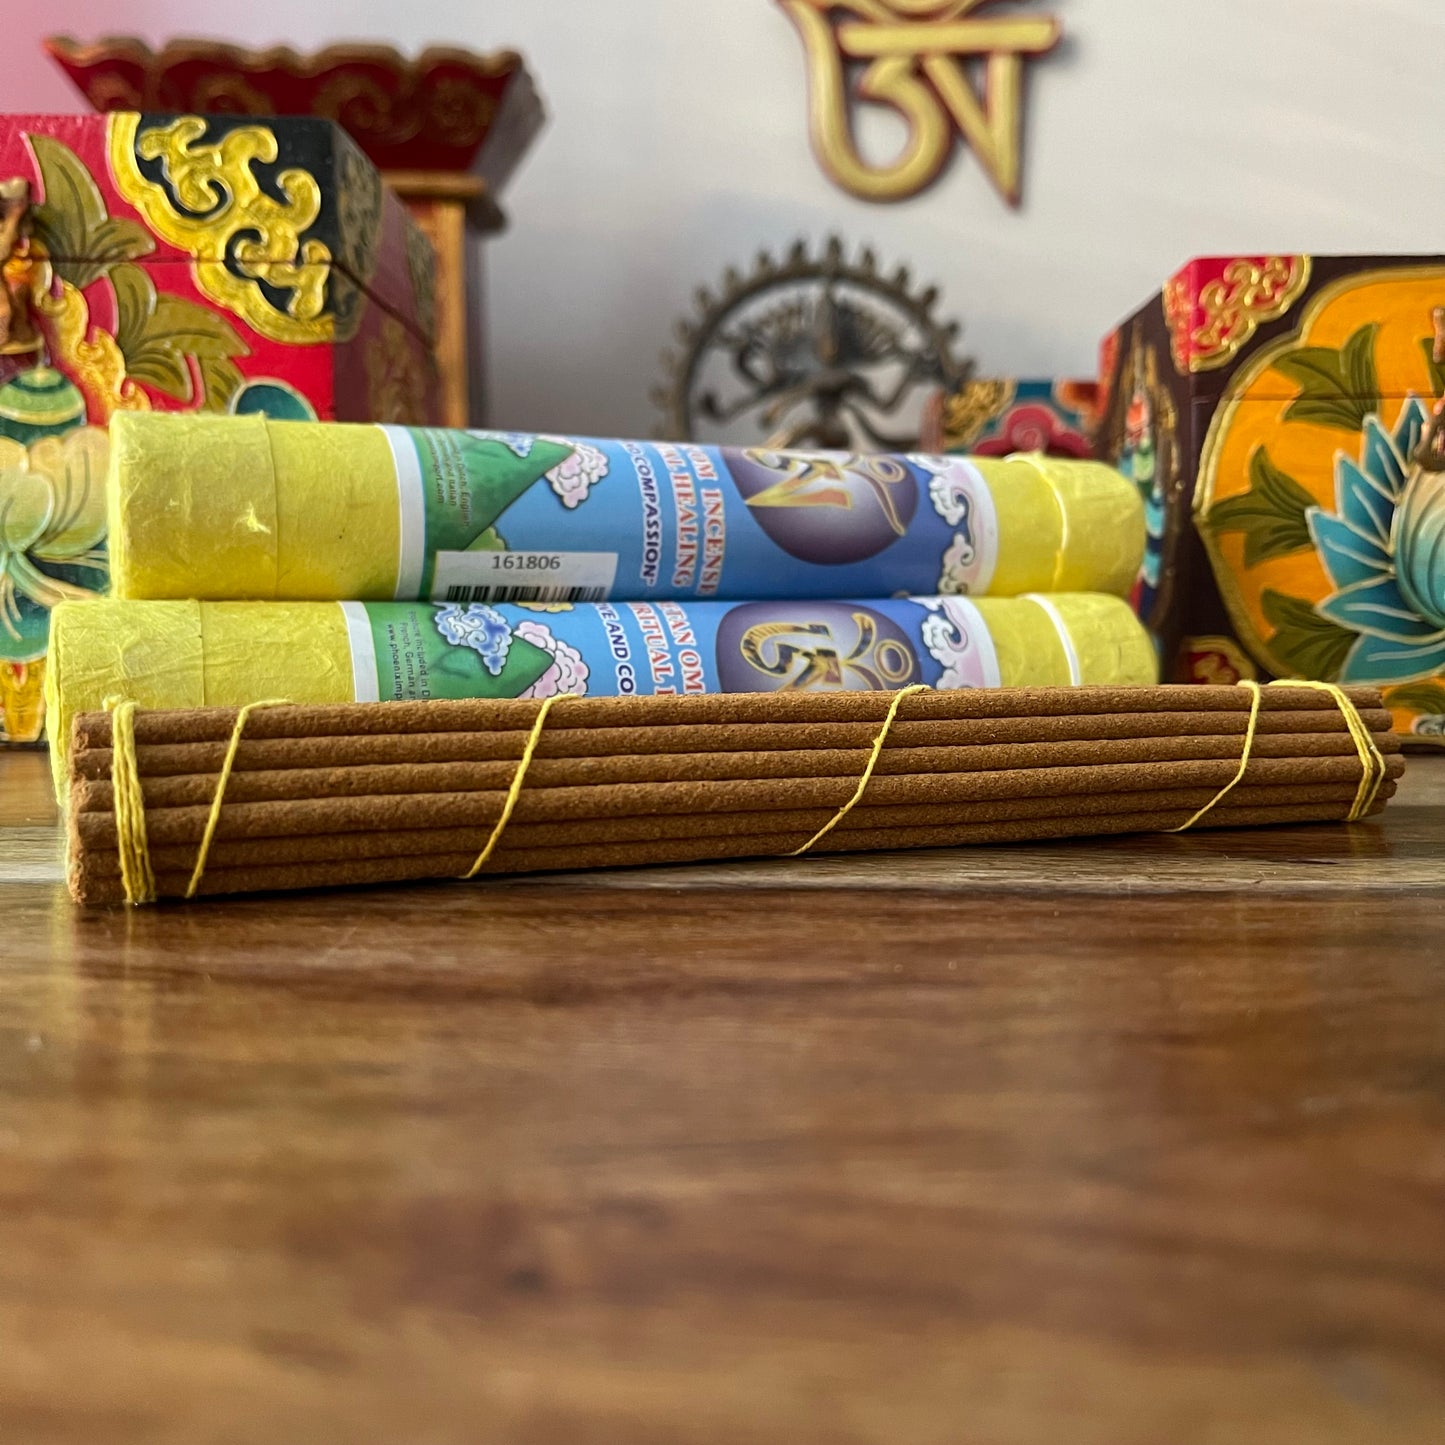 Tibetan OM Spiritual Healing Incense